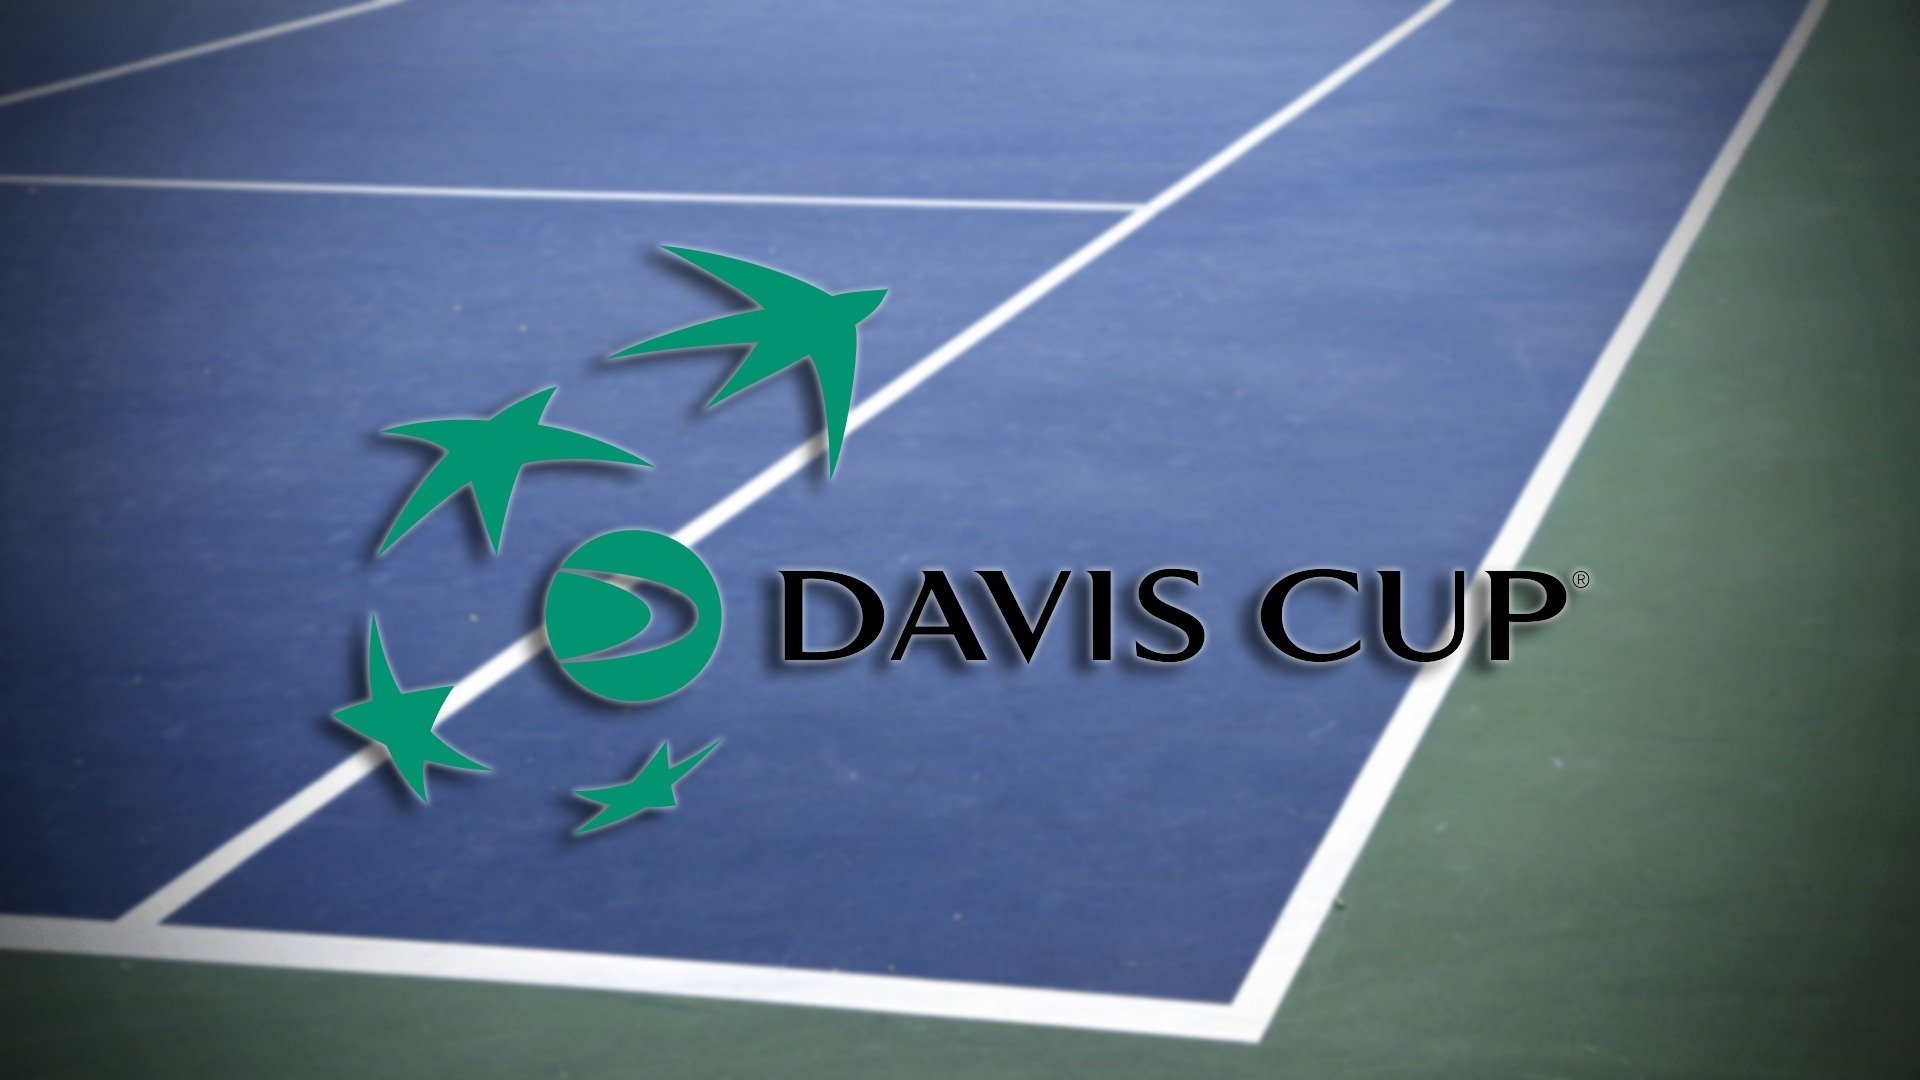 Watch Davis Cup Tennis live or ondemand Freeview Australia